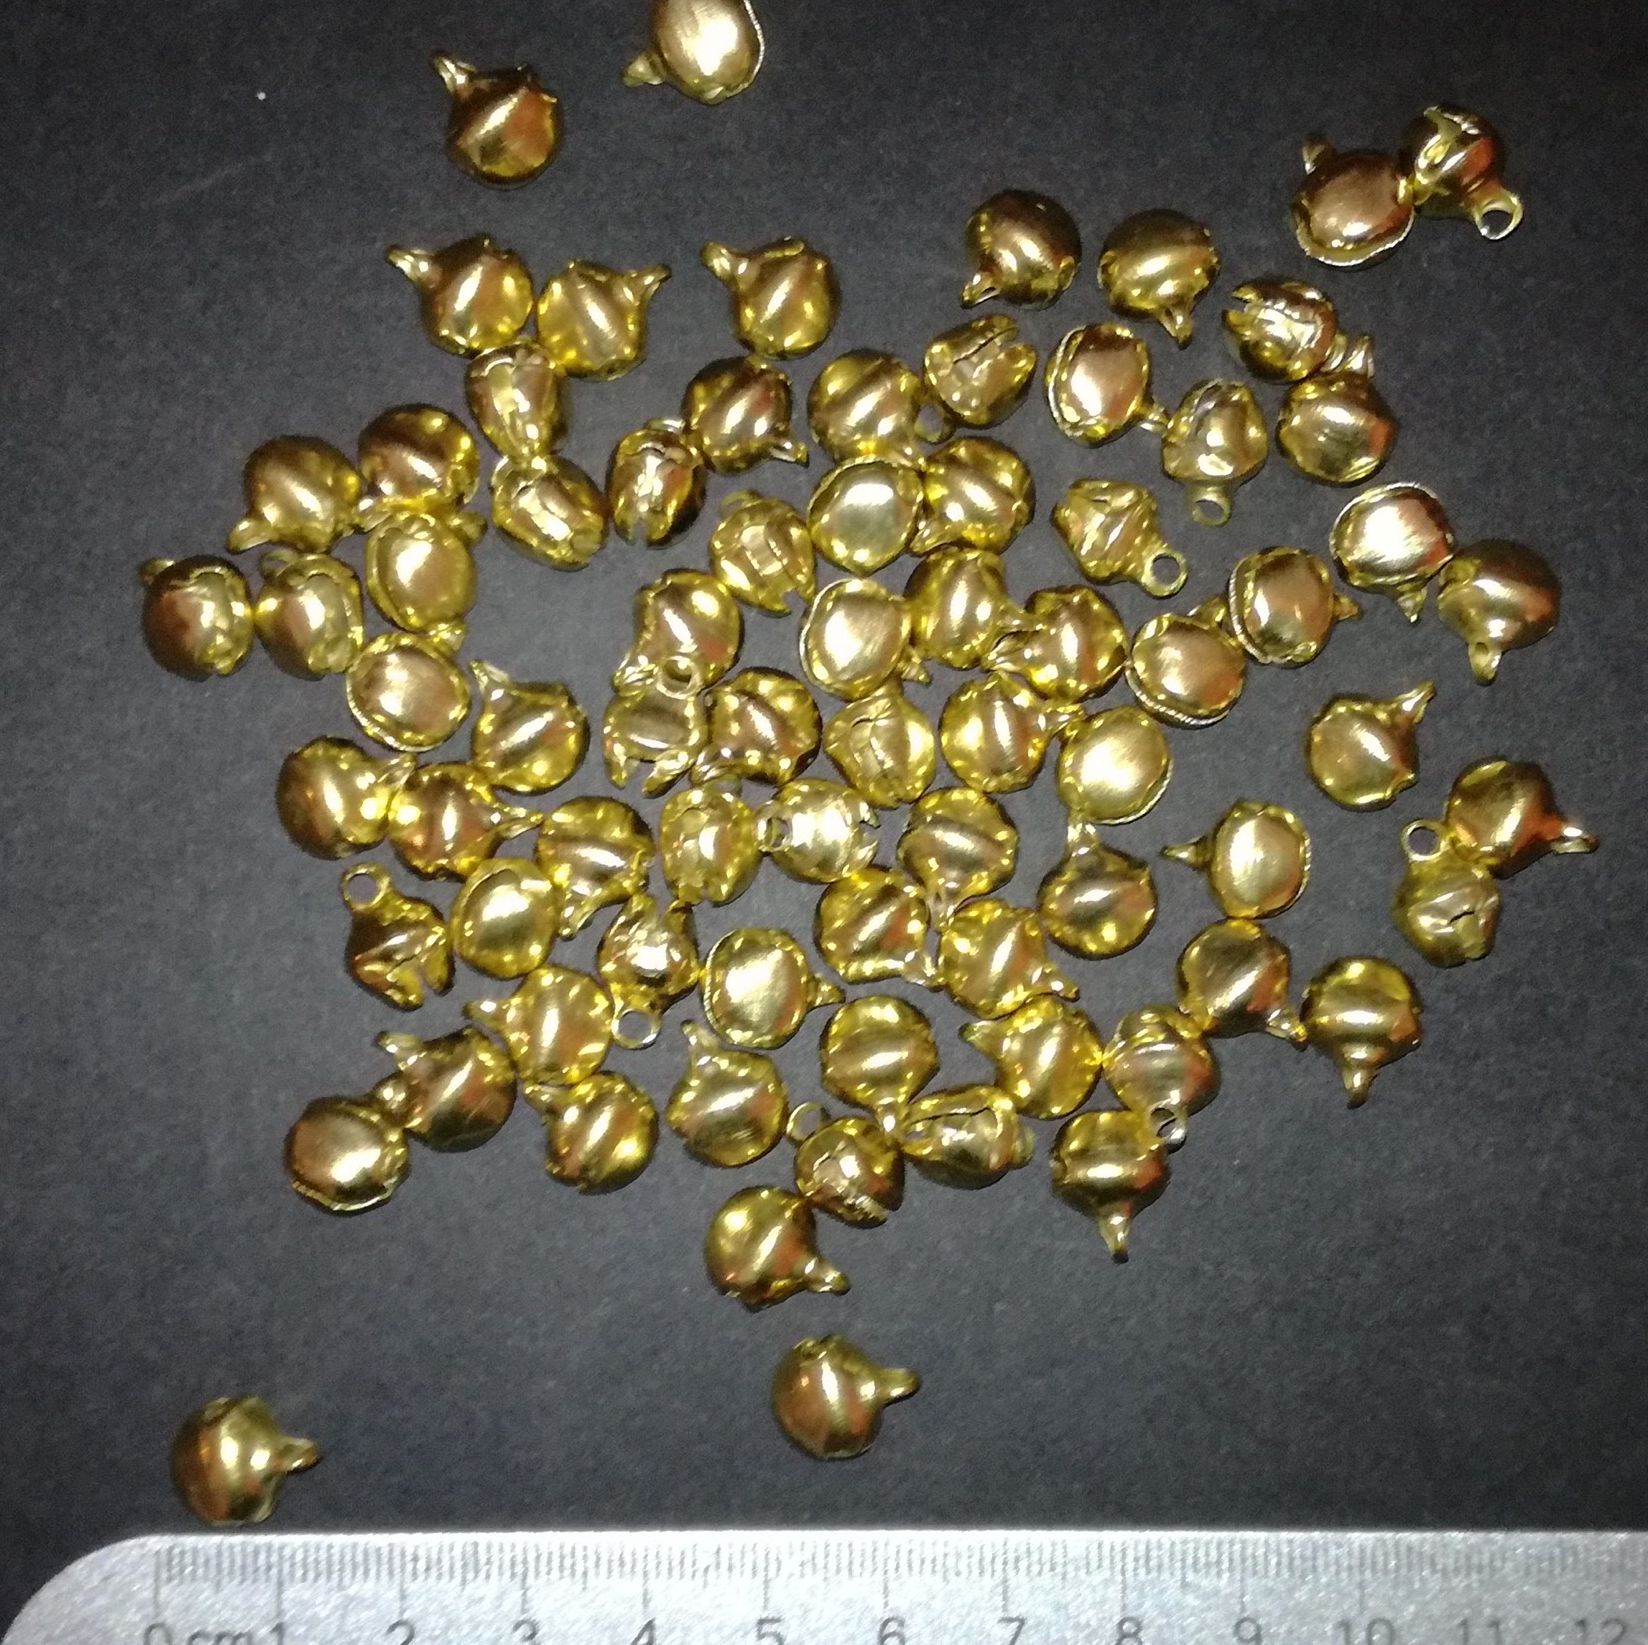 Kolomp pergő, arany, 10 mm gömb alakú, fűzőlyukkal,  75 db/doboz 690 Ft/doboz